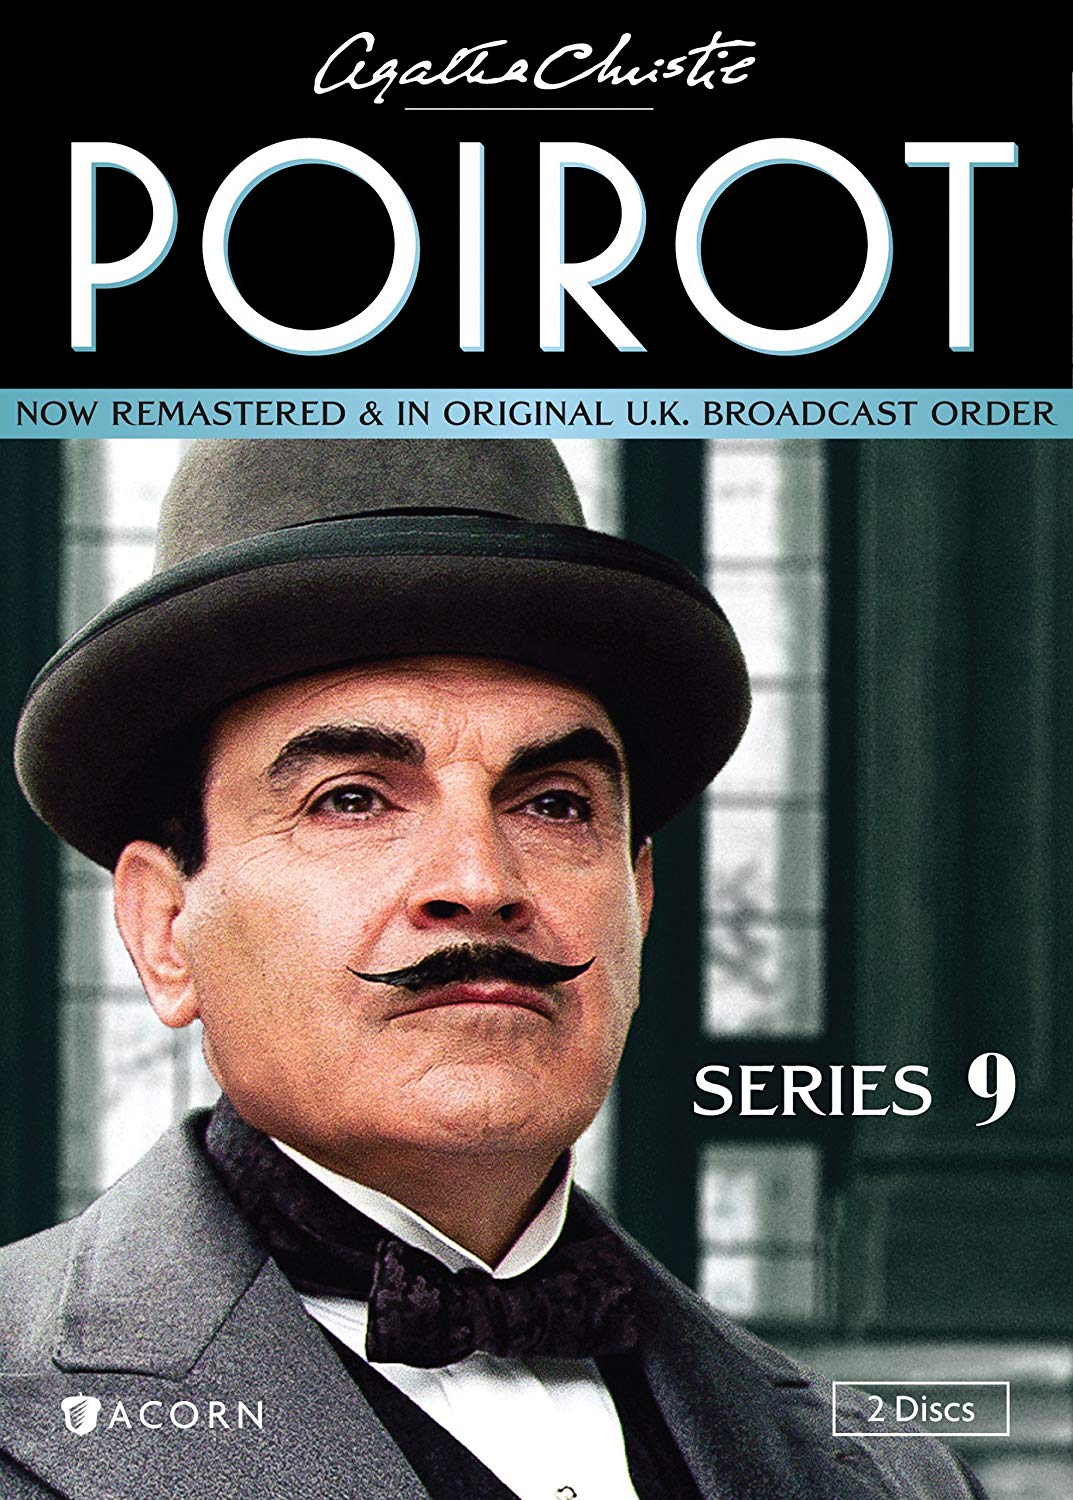 Poirot free movies downloads